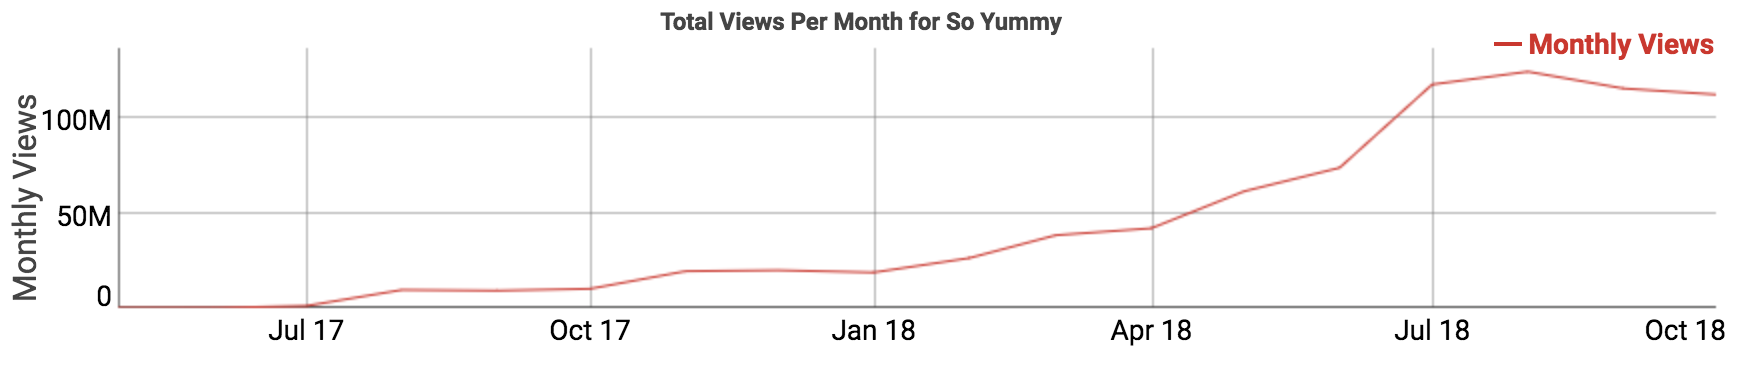 youtube content farm views skyrocket